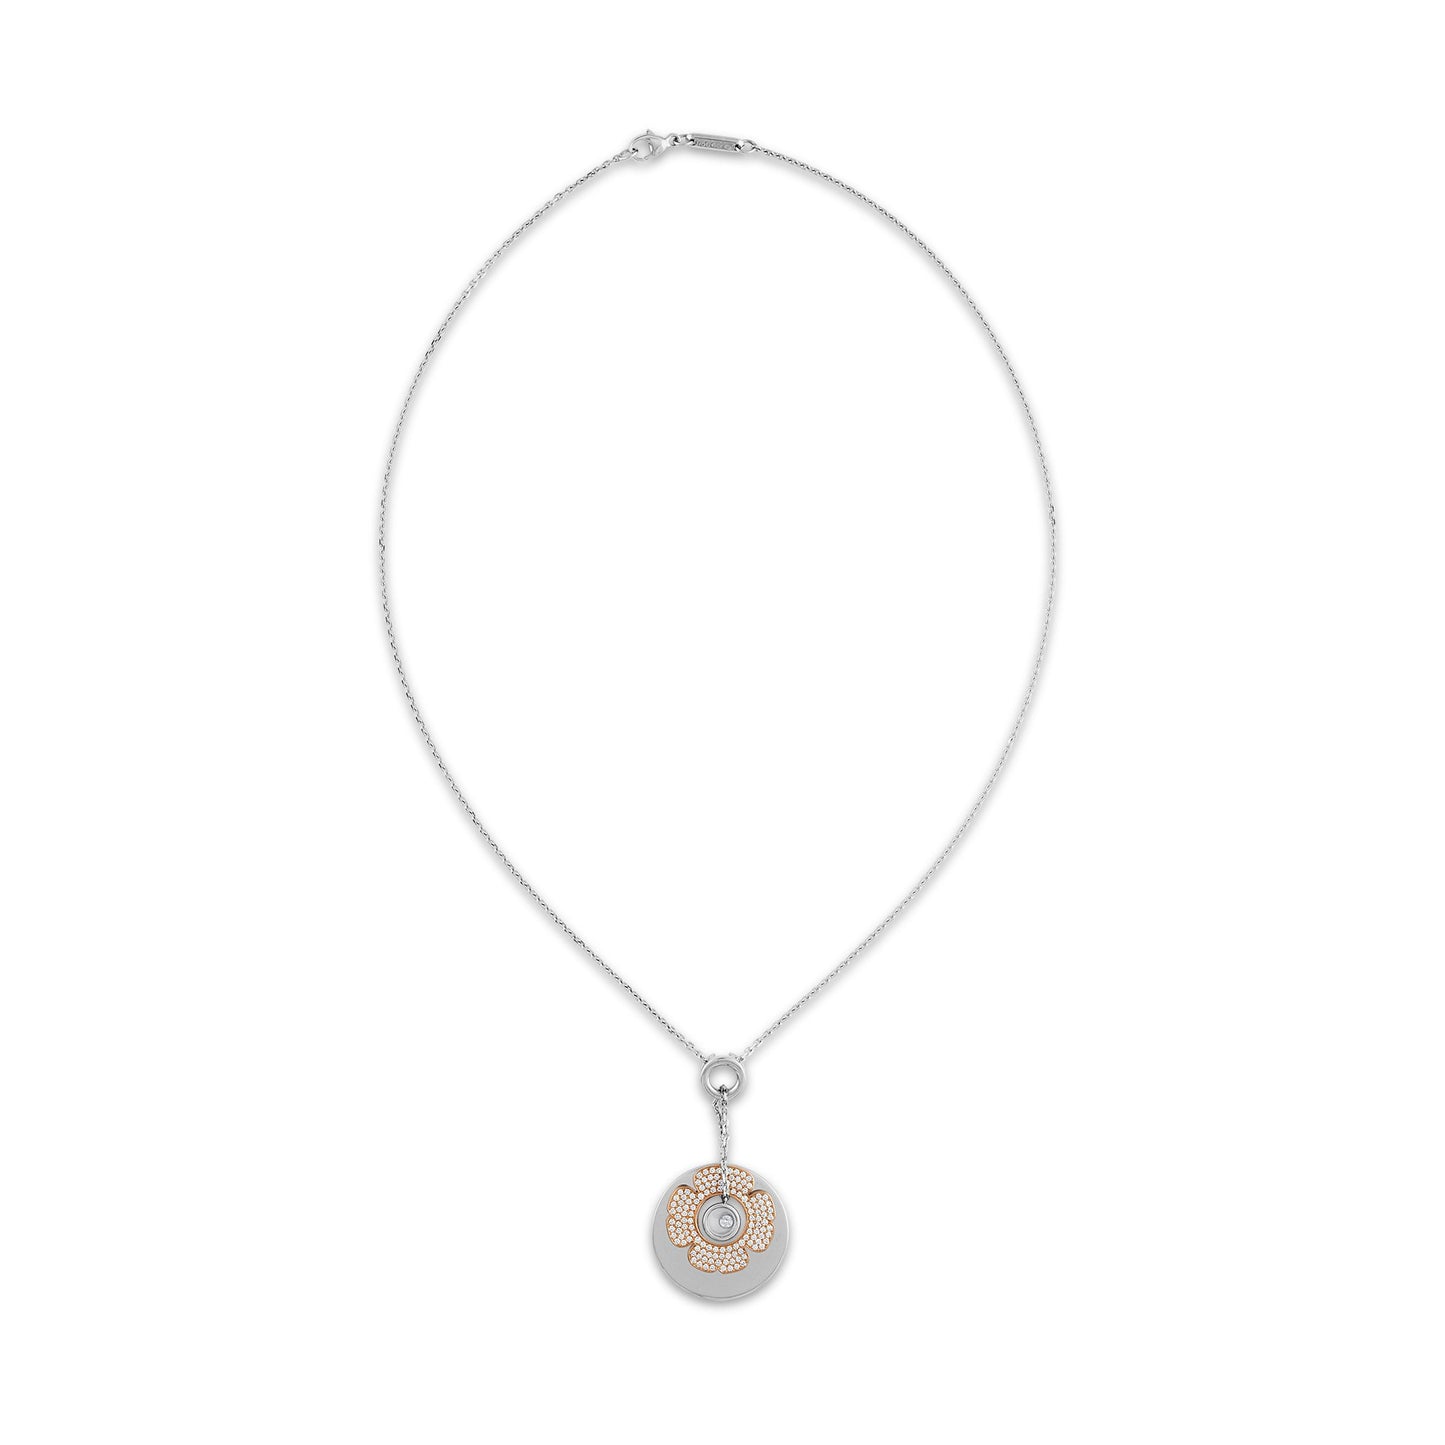 Chopard 18K White & Rose Gold Diamond Necklace Length: 16"